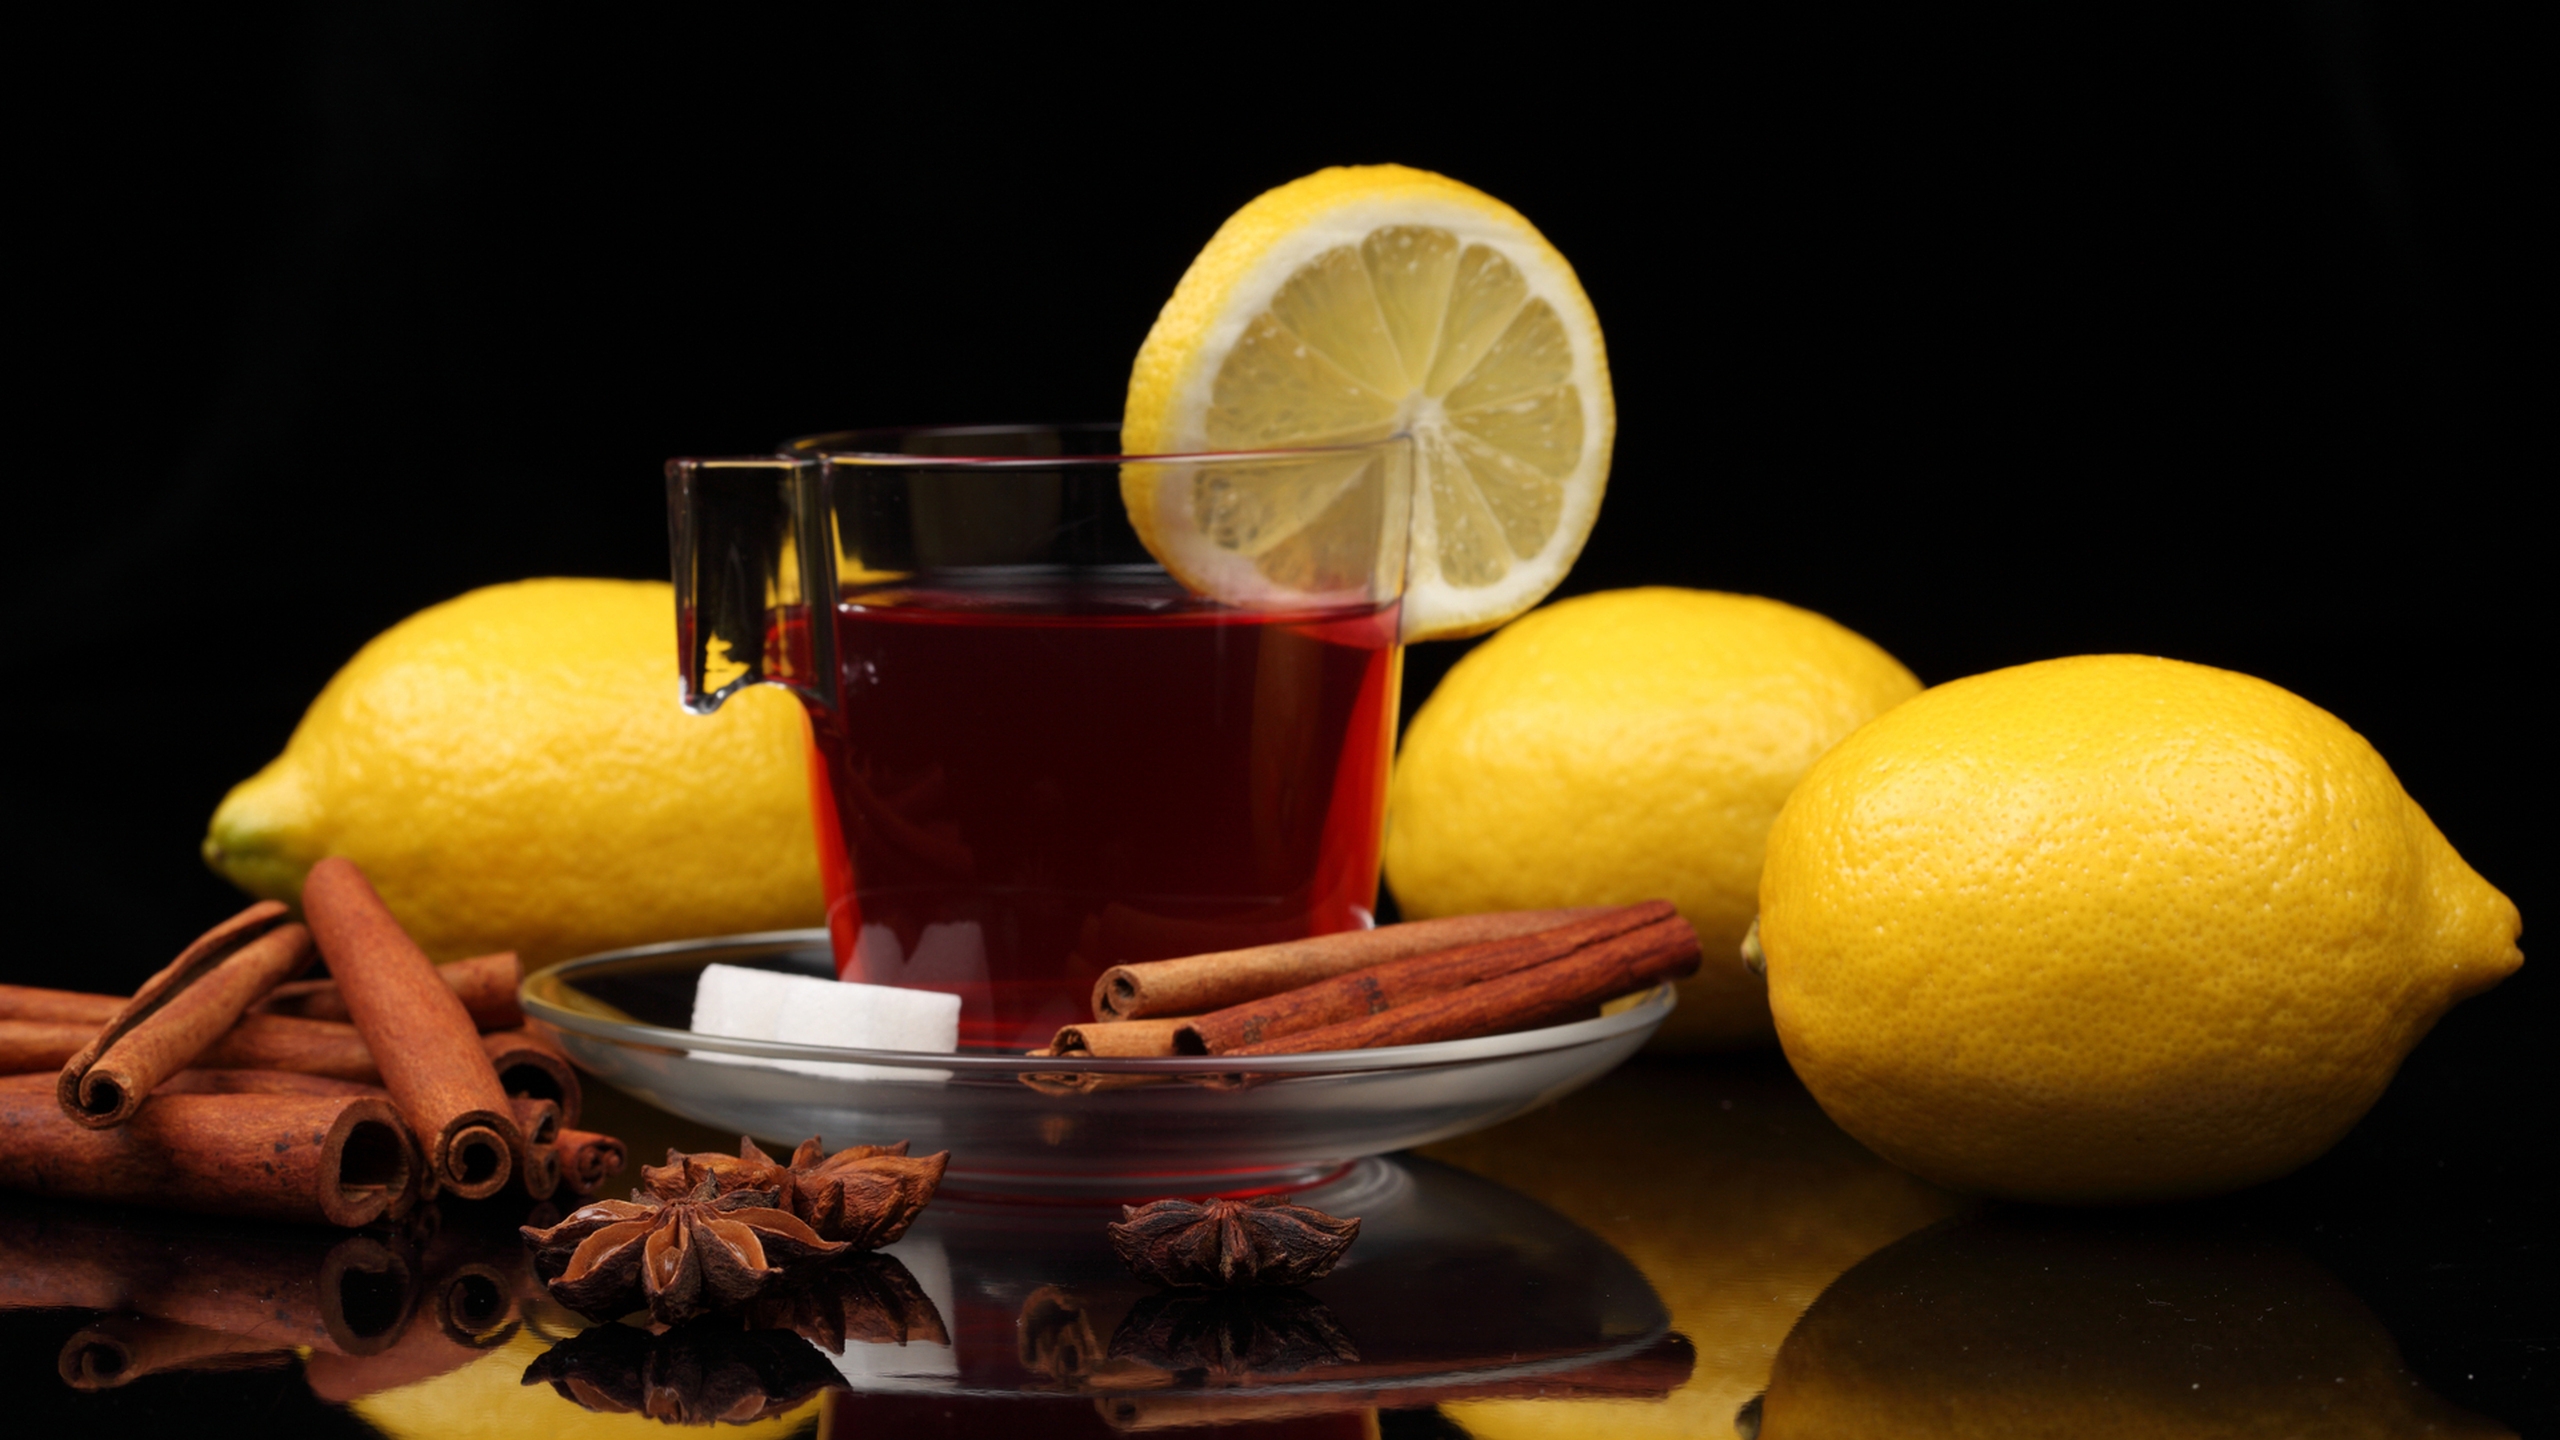 Cinnamon And Lemon Tea for 2560x1440 HDTV resolution